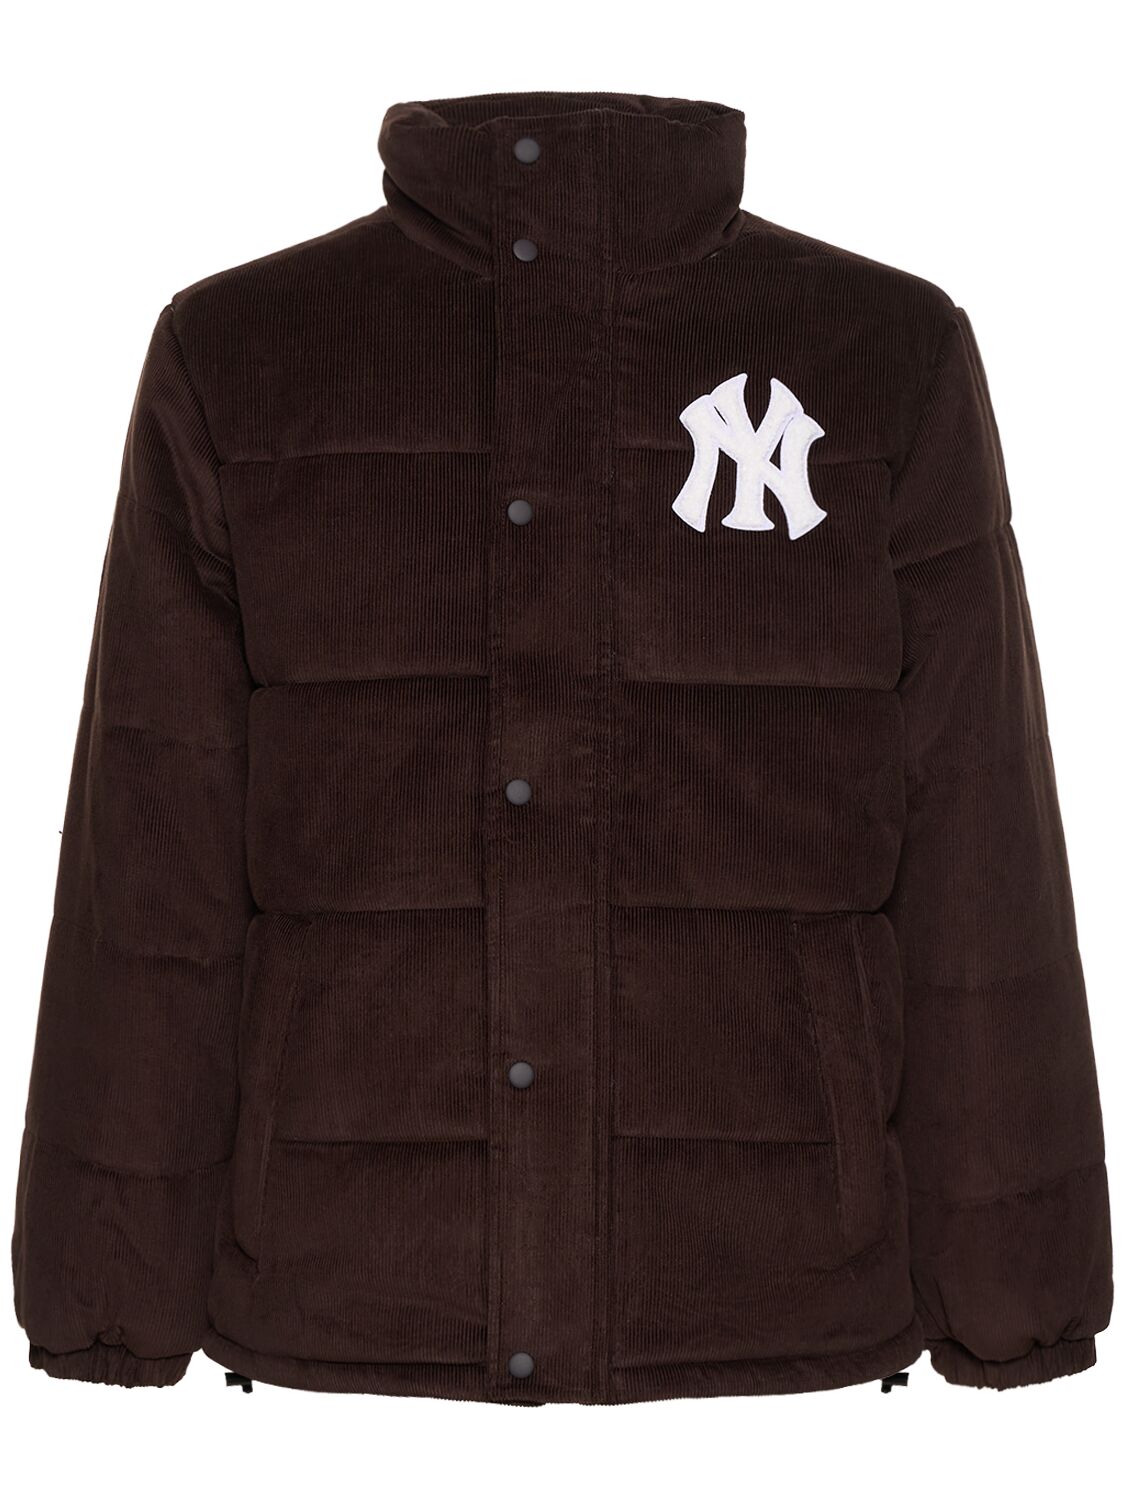 Image of New York Yankees Mlb Puffer Jacket